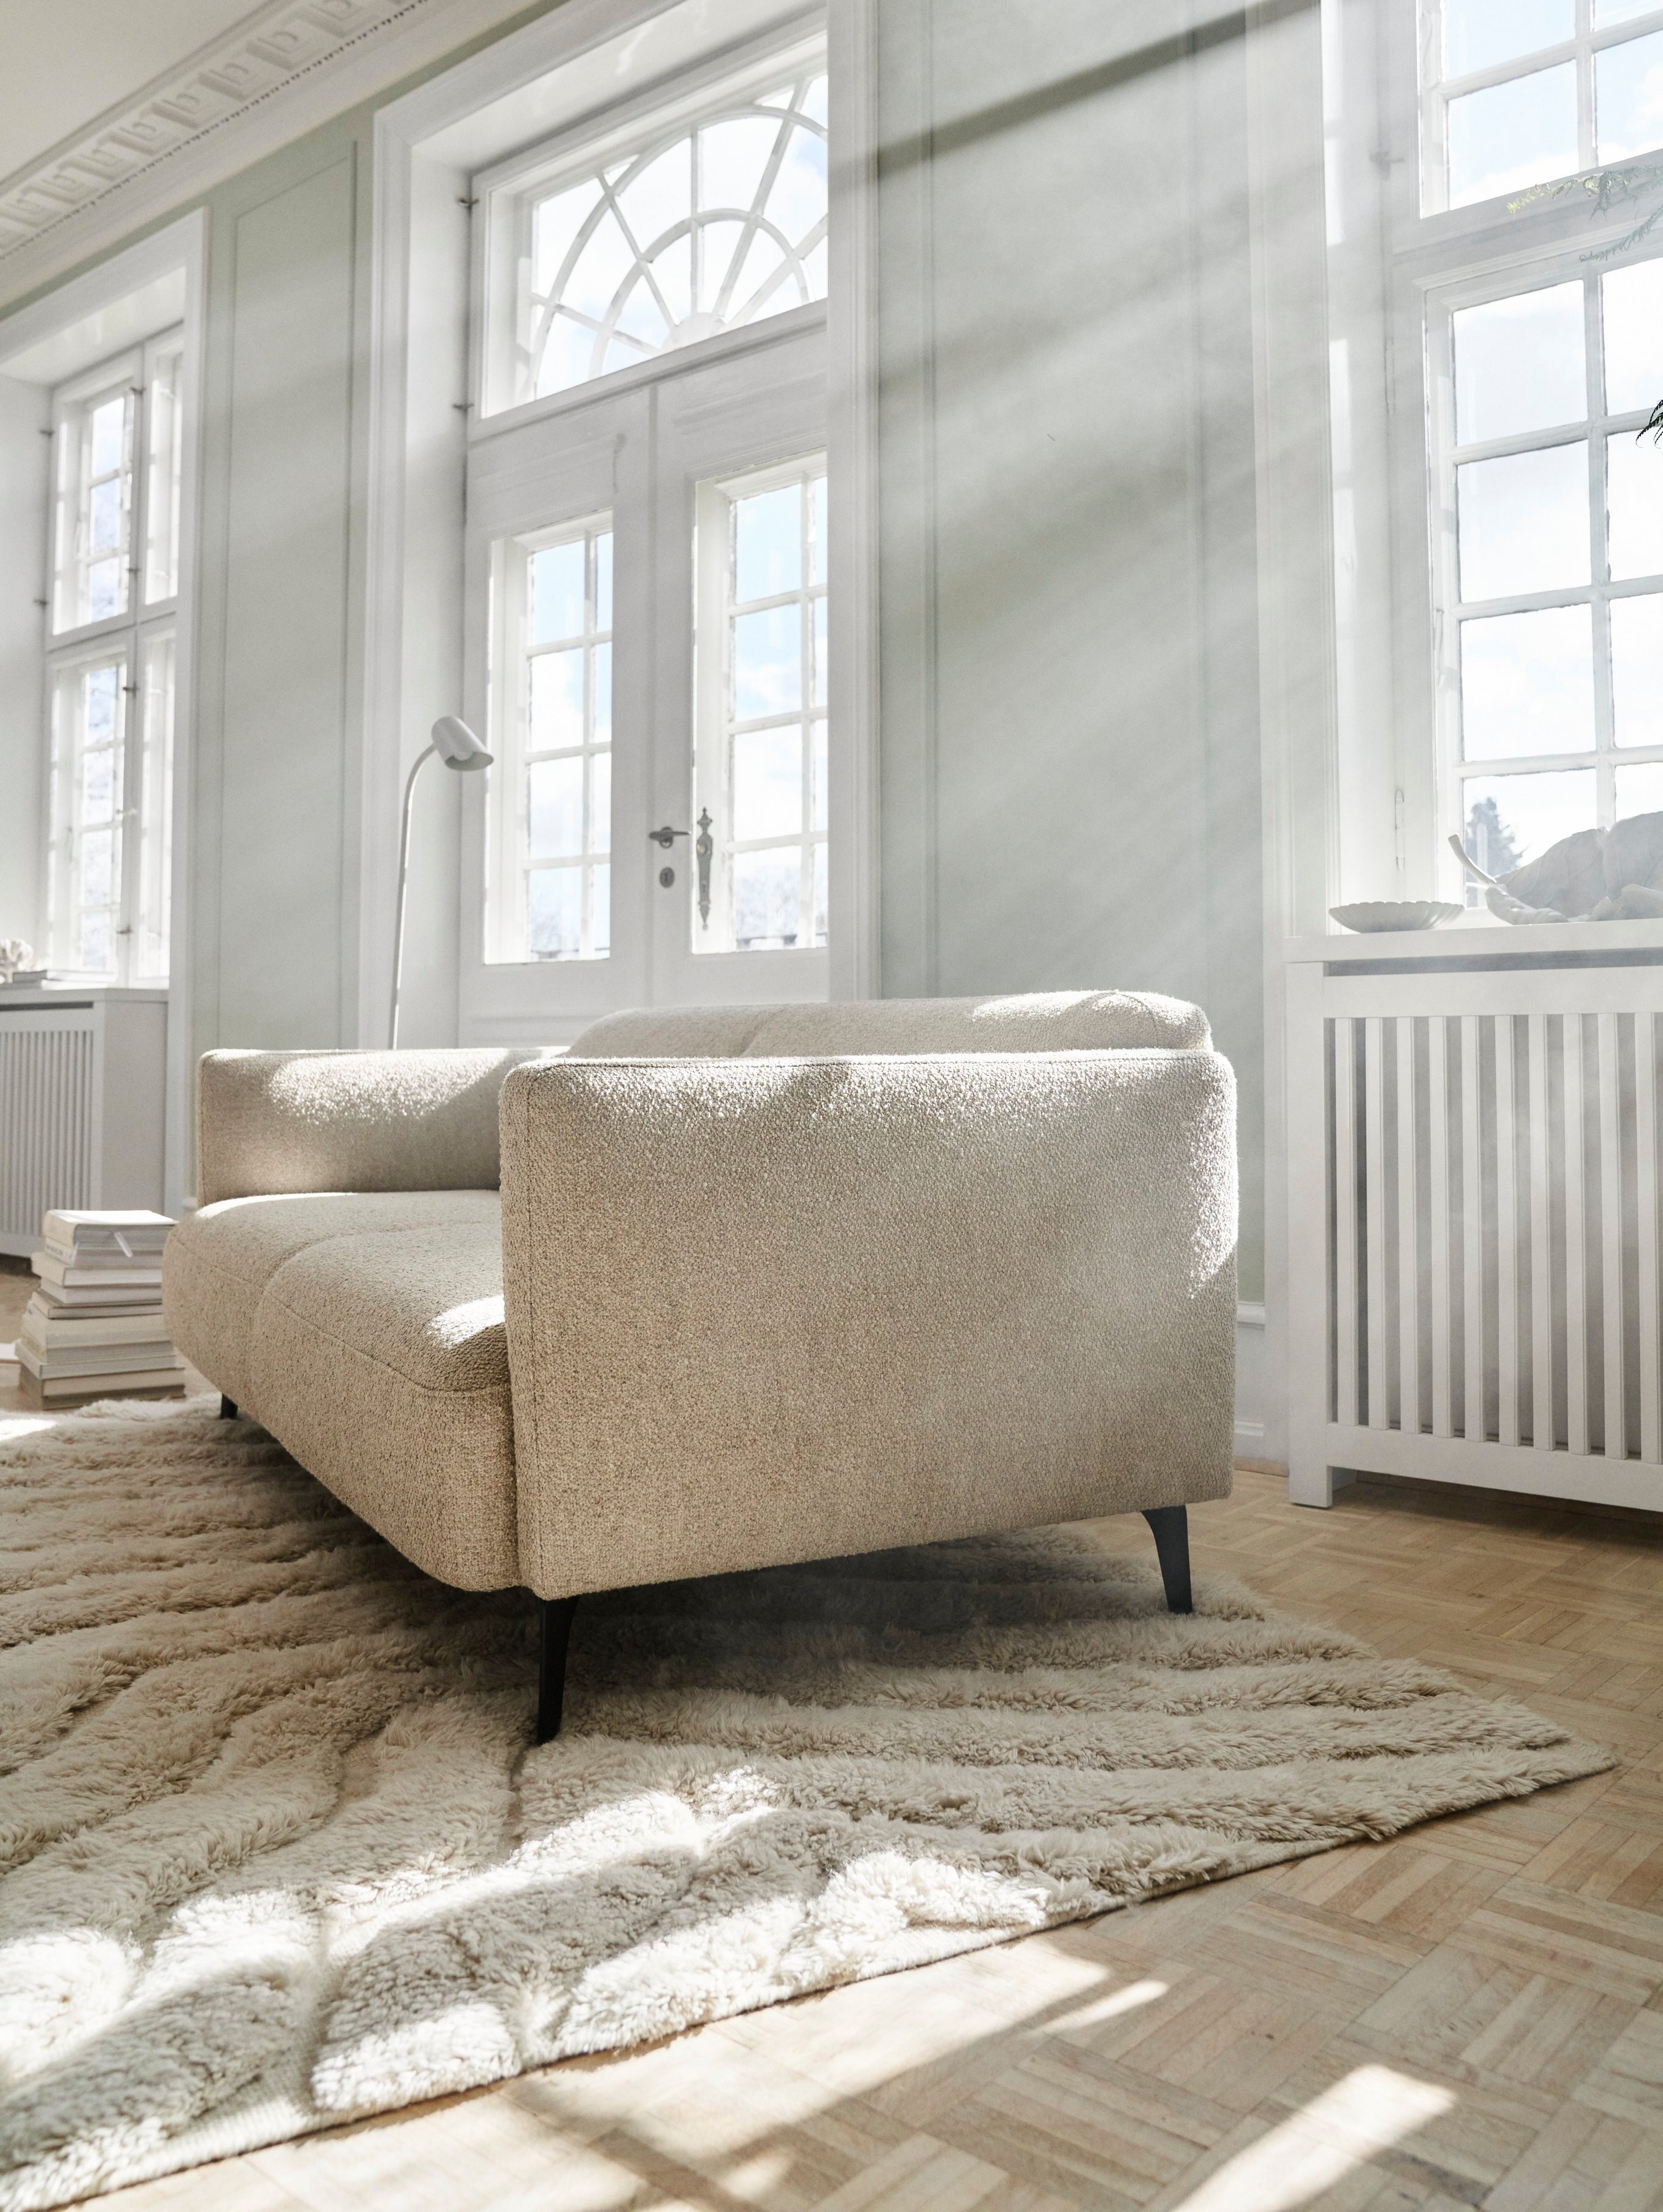 Modena sofa in a nice sunlit scandinavian inspired room.